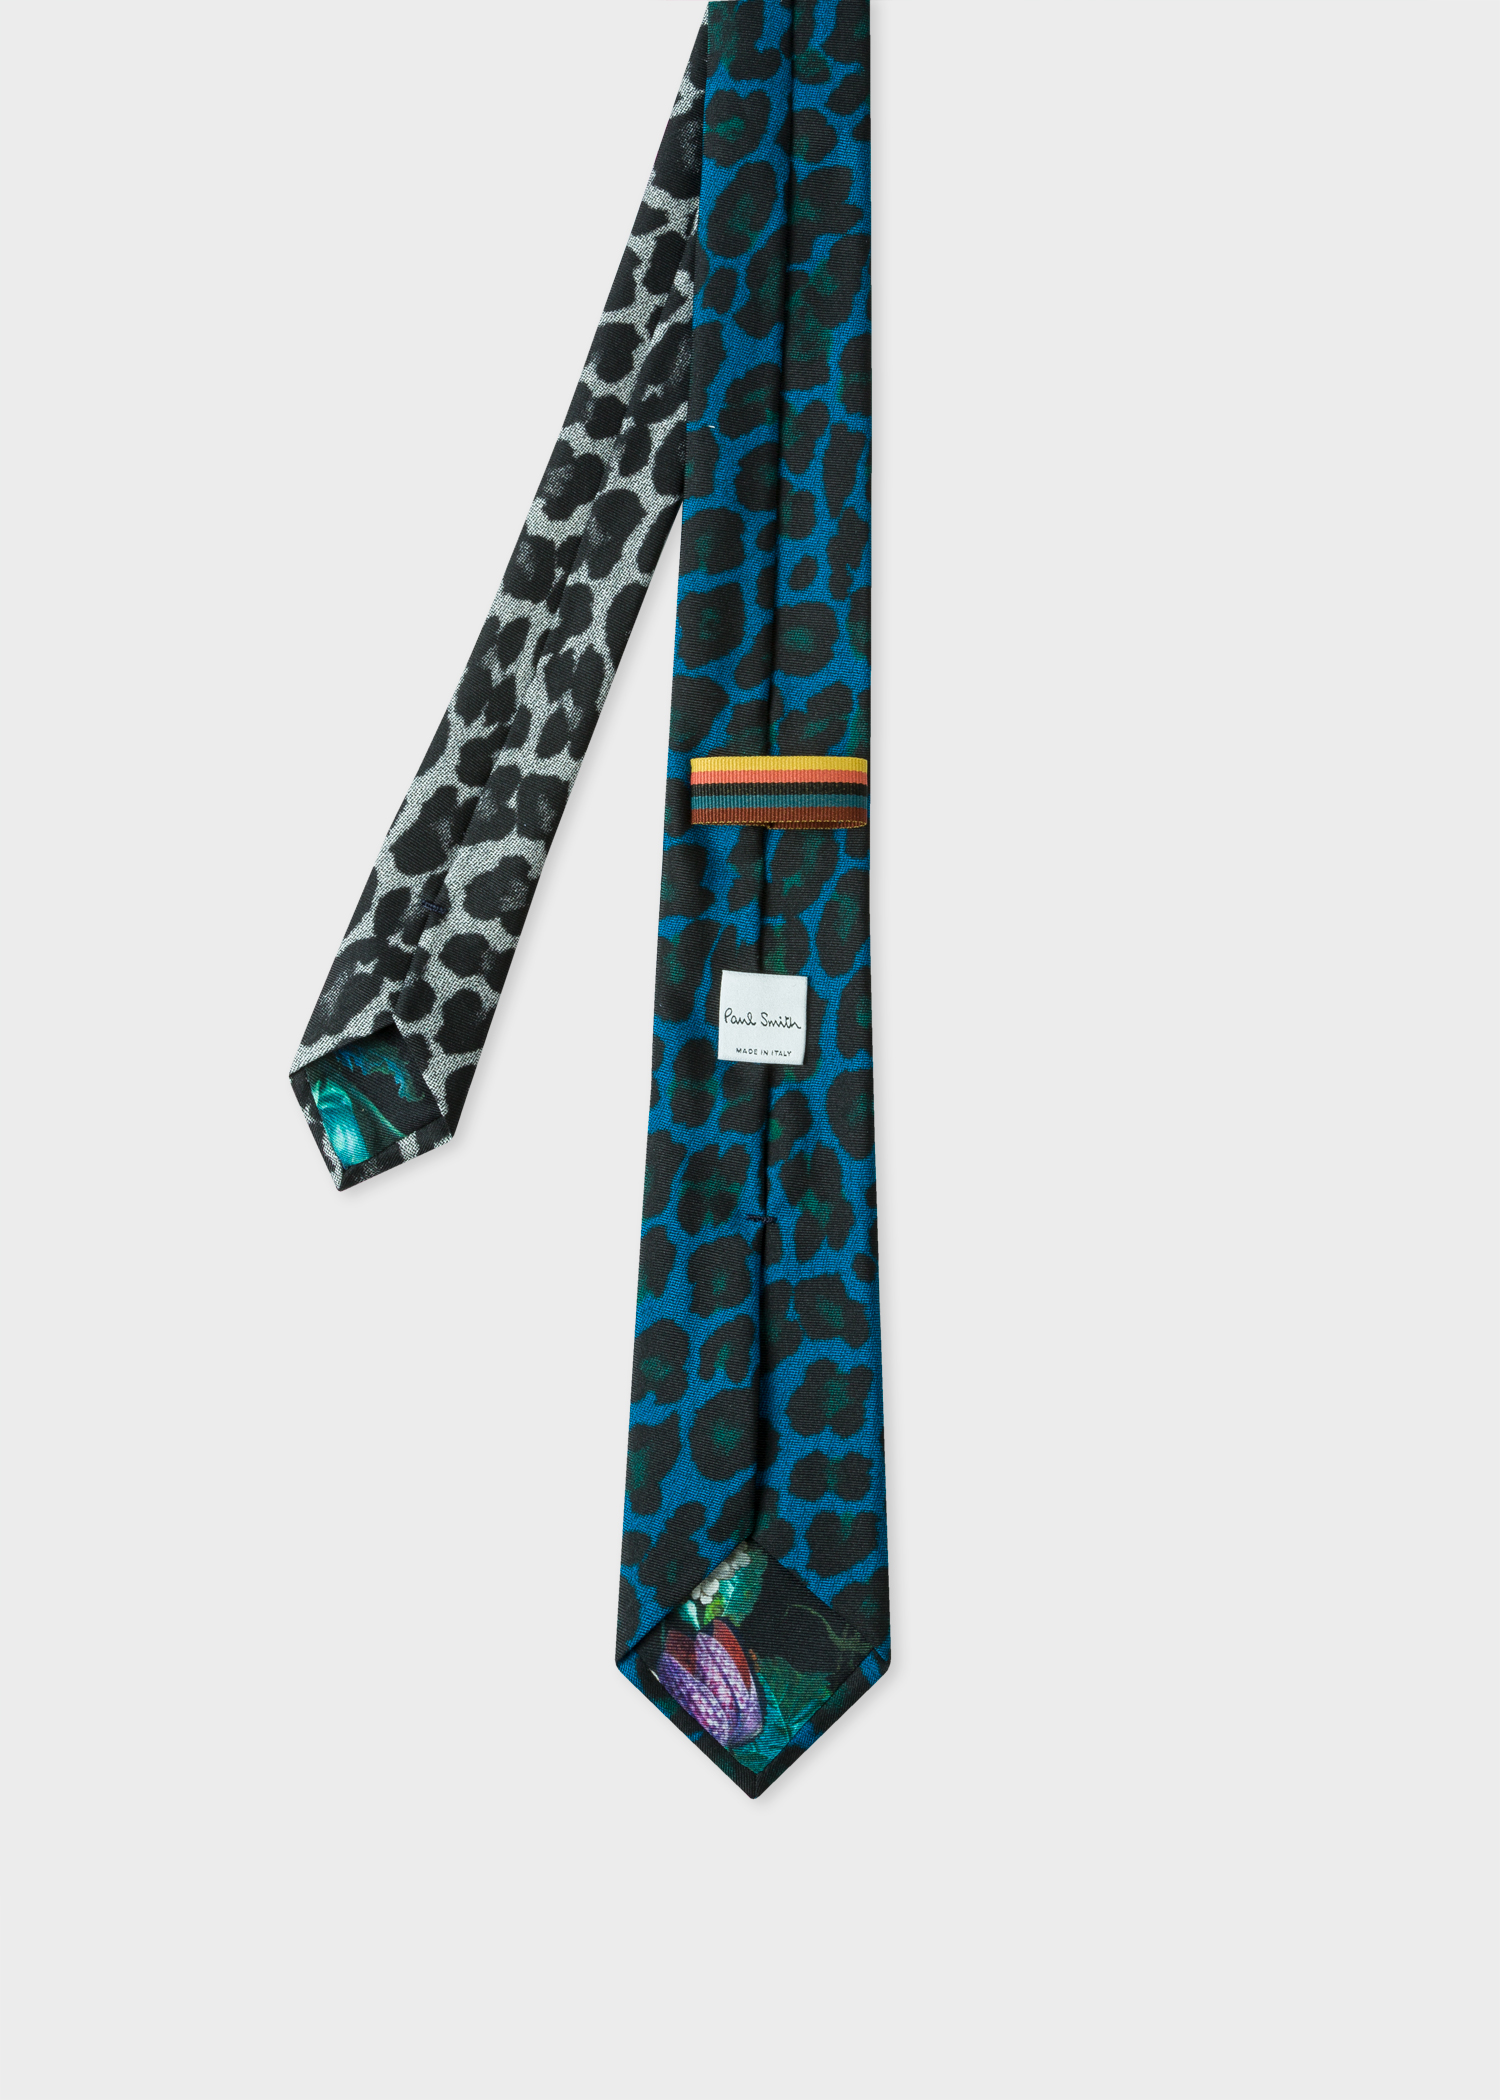 Back View - Men's Blue 'Leopard' Print Narrow Silk Tie Paul Smith